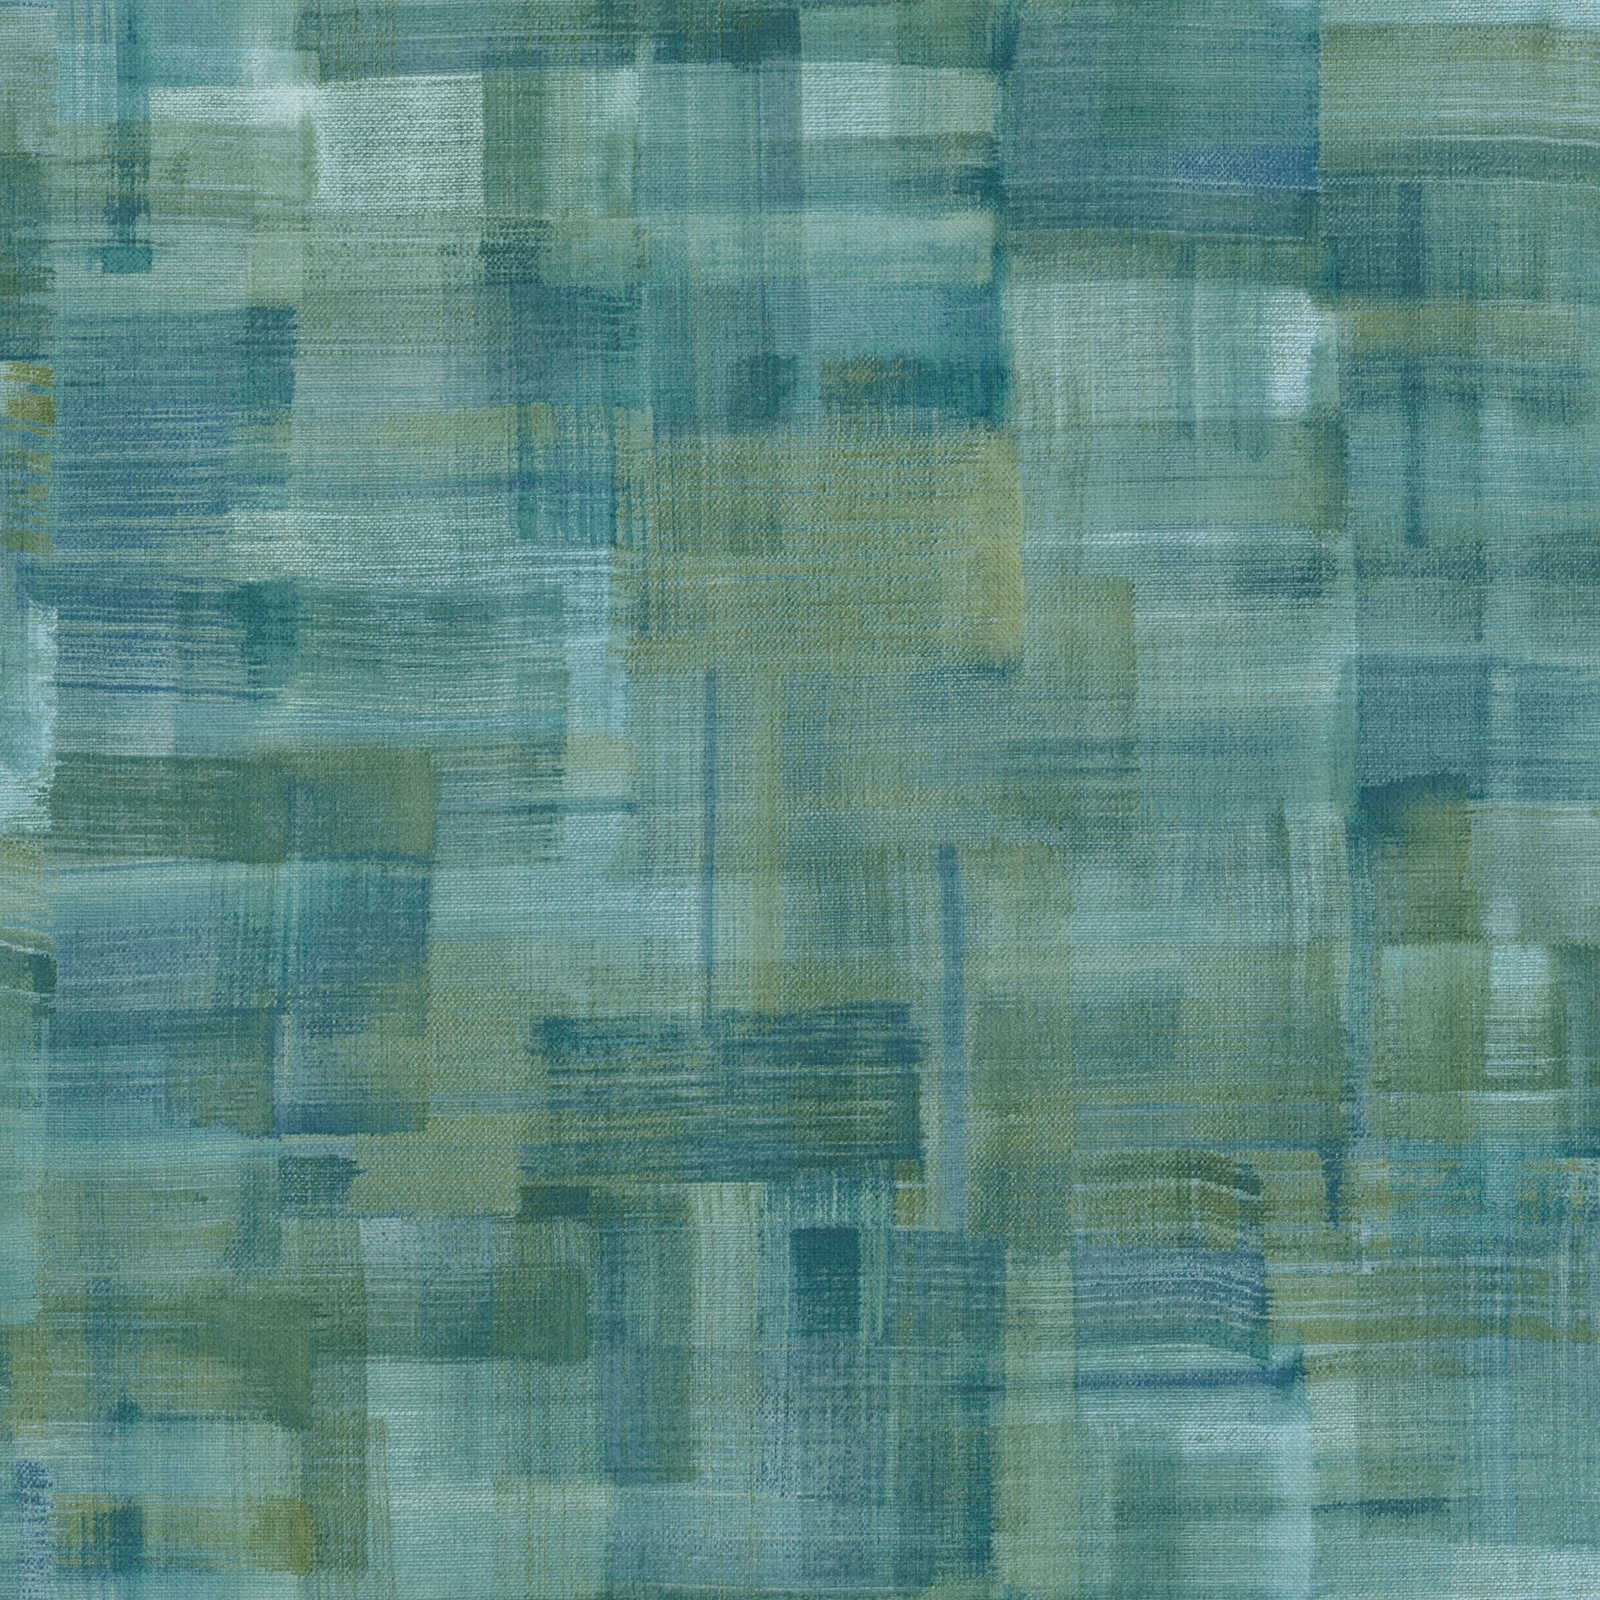 Wallpaper brushstroke design & canvas texture - blue, green, yellow
